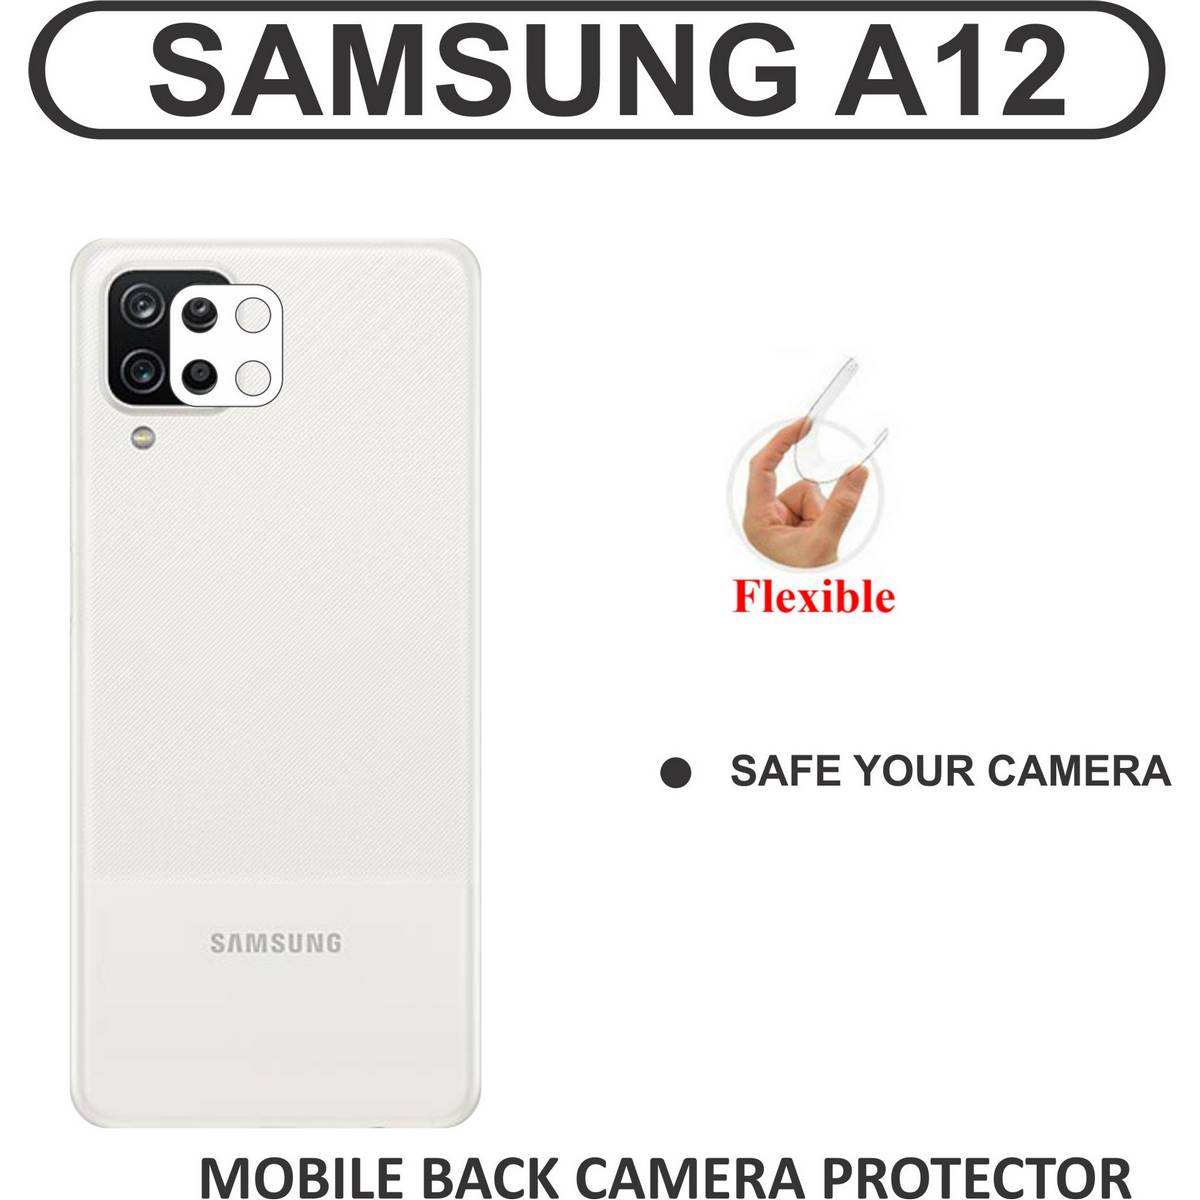 Update Samsung A12 Price In Daraz Review